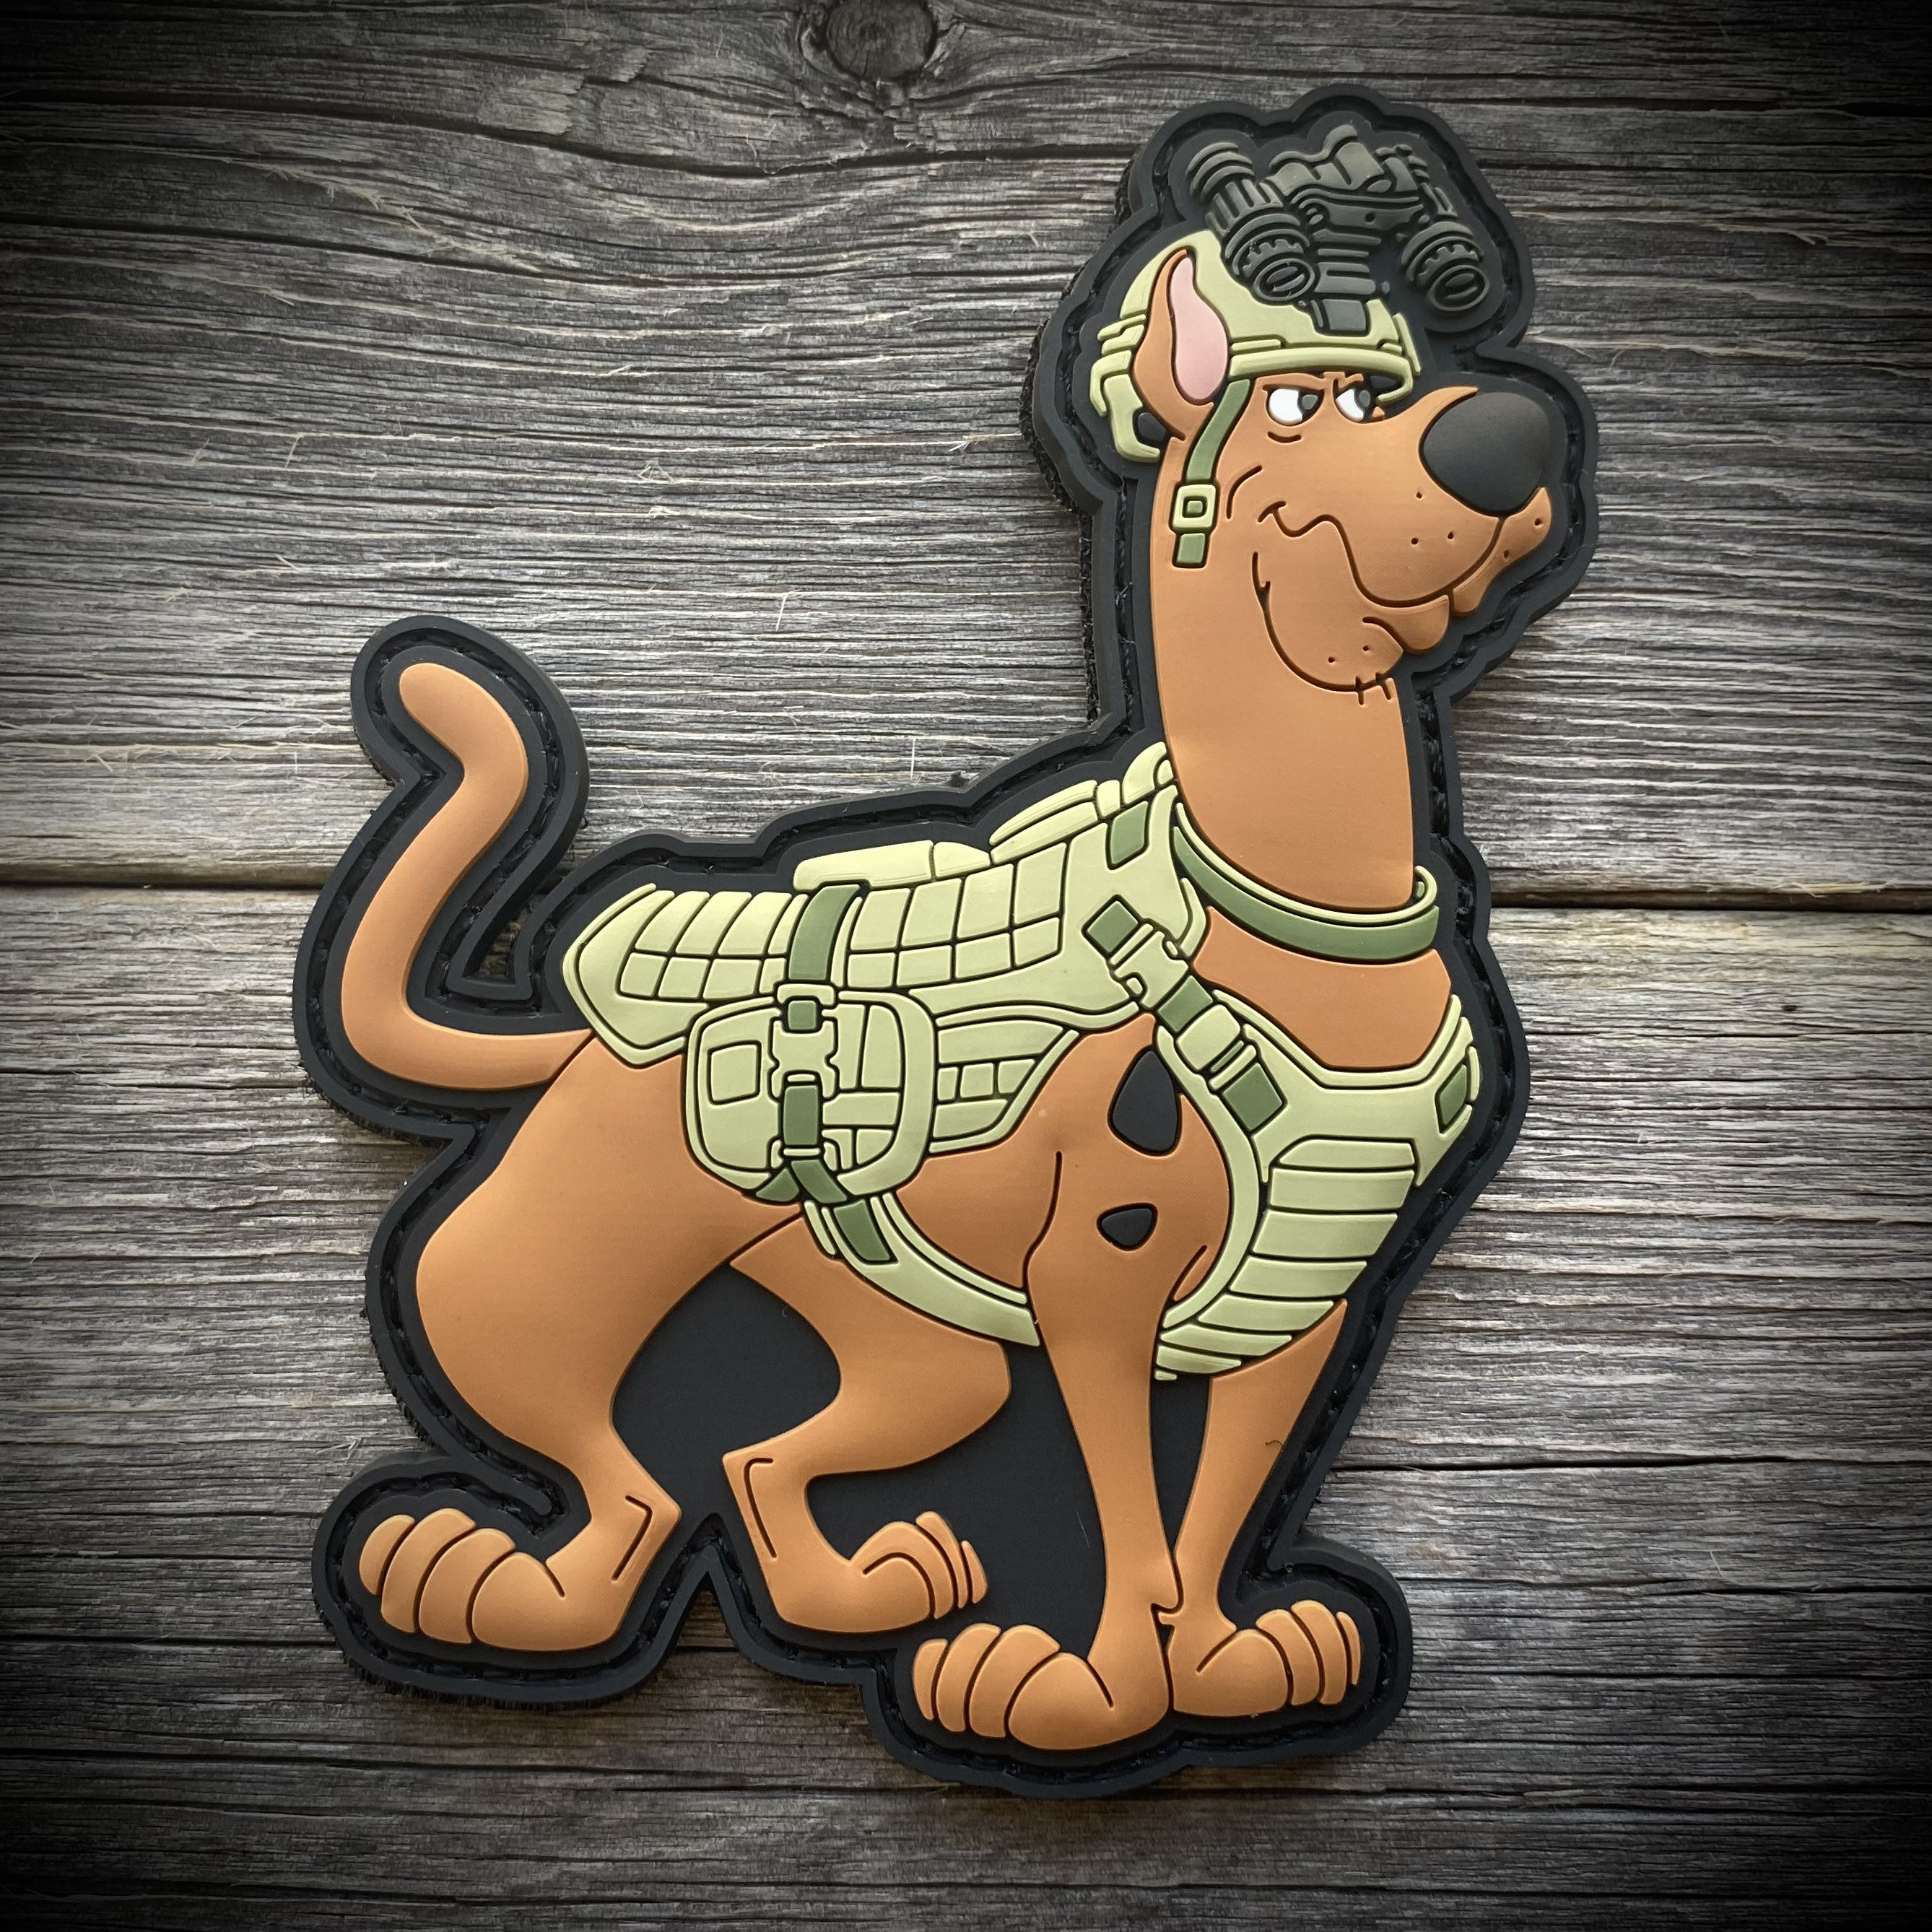 Tactical “Scooby Doo” PVC Patch - Scooby Doo Parody Fan Art - Morale Patch